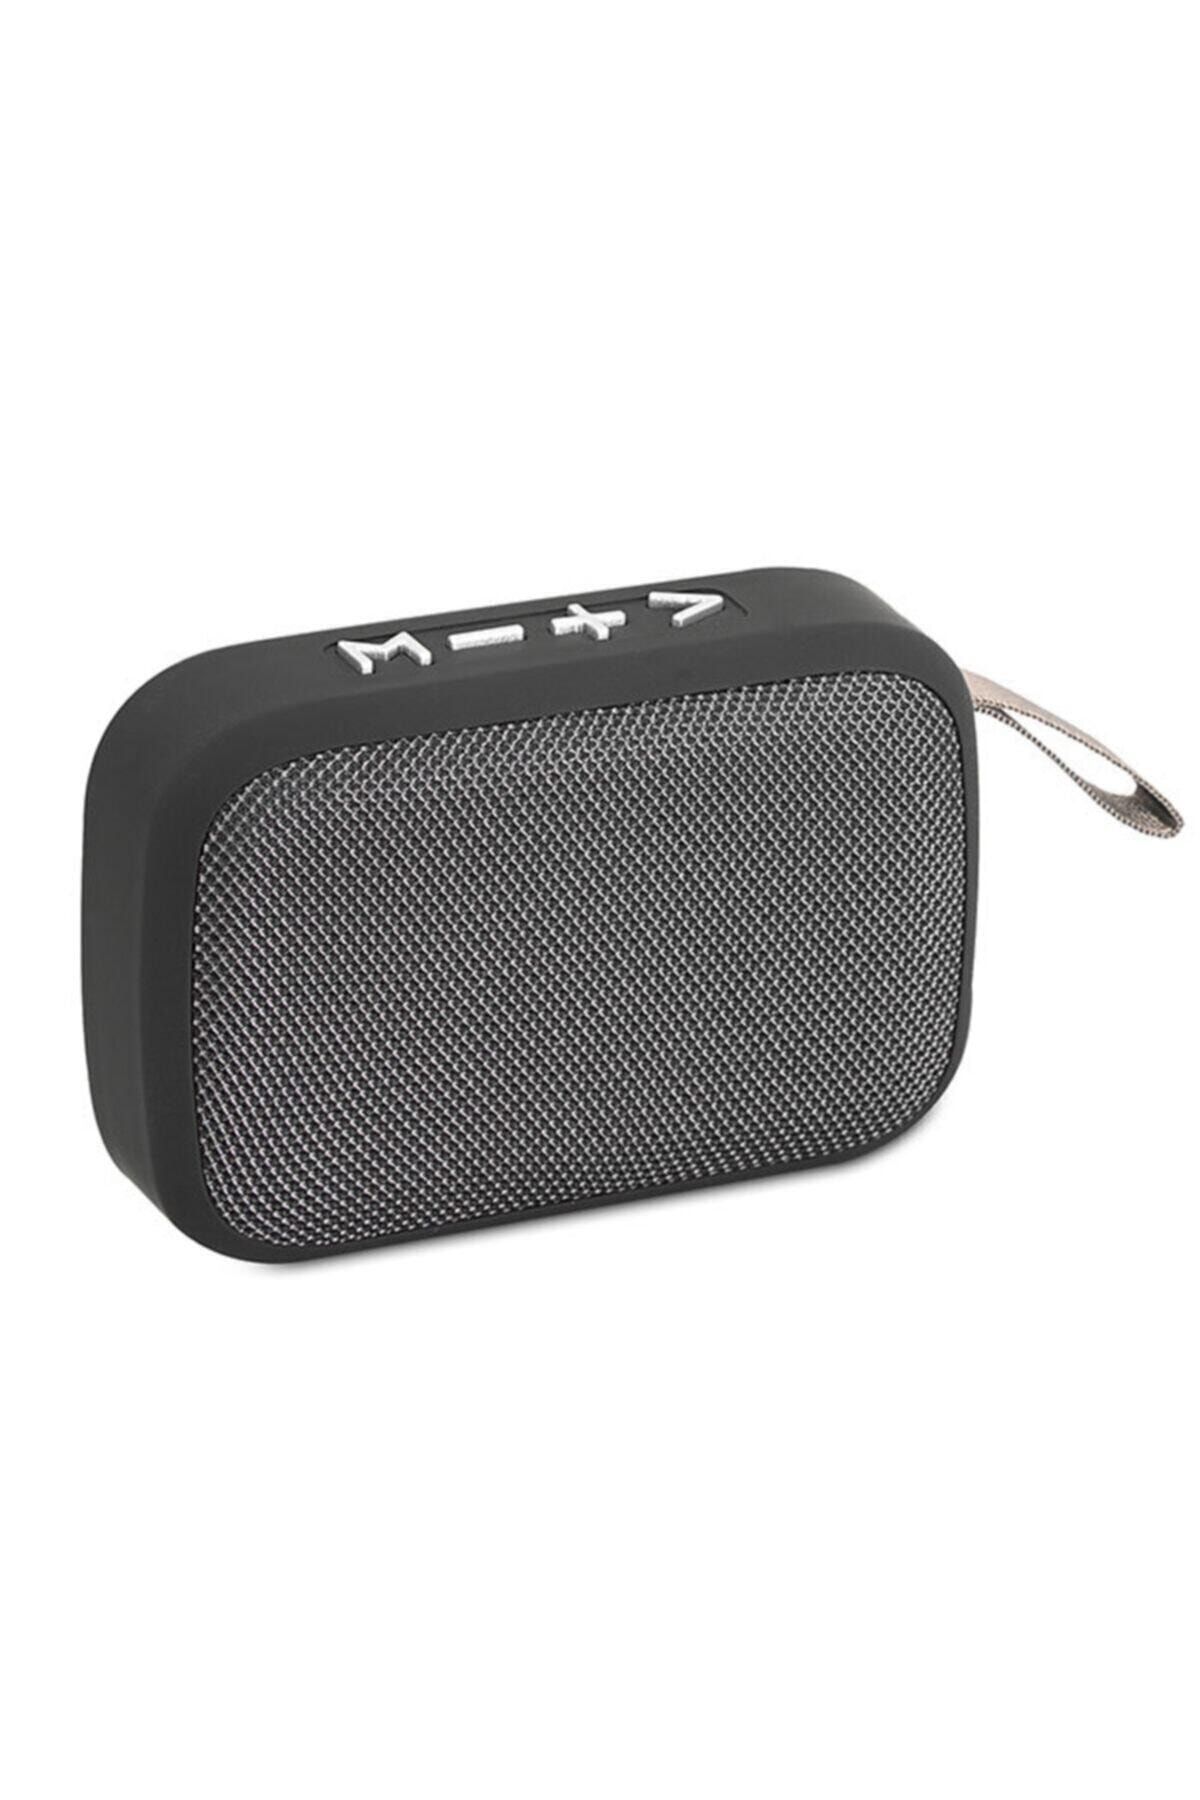 asonic AS-02 Hoparlör Gümüş Bluetooth 3W TF/USB Destekli Speaker Siyah